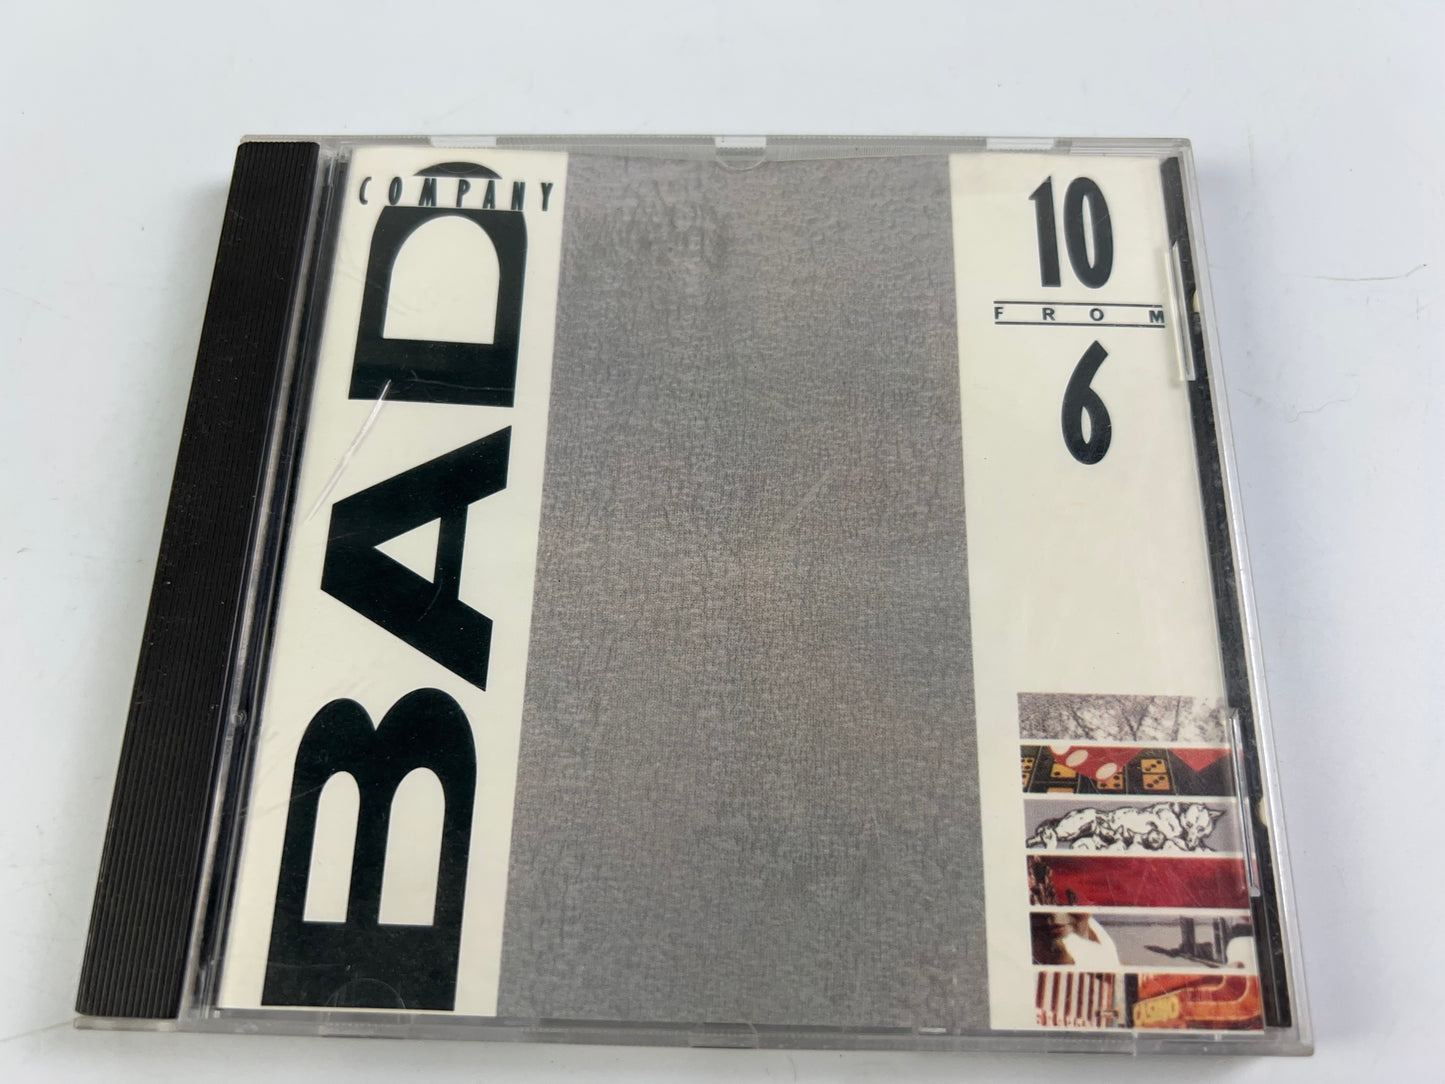 Bad Company : 10 from 6 CD (1986)